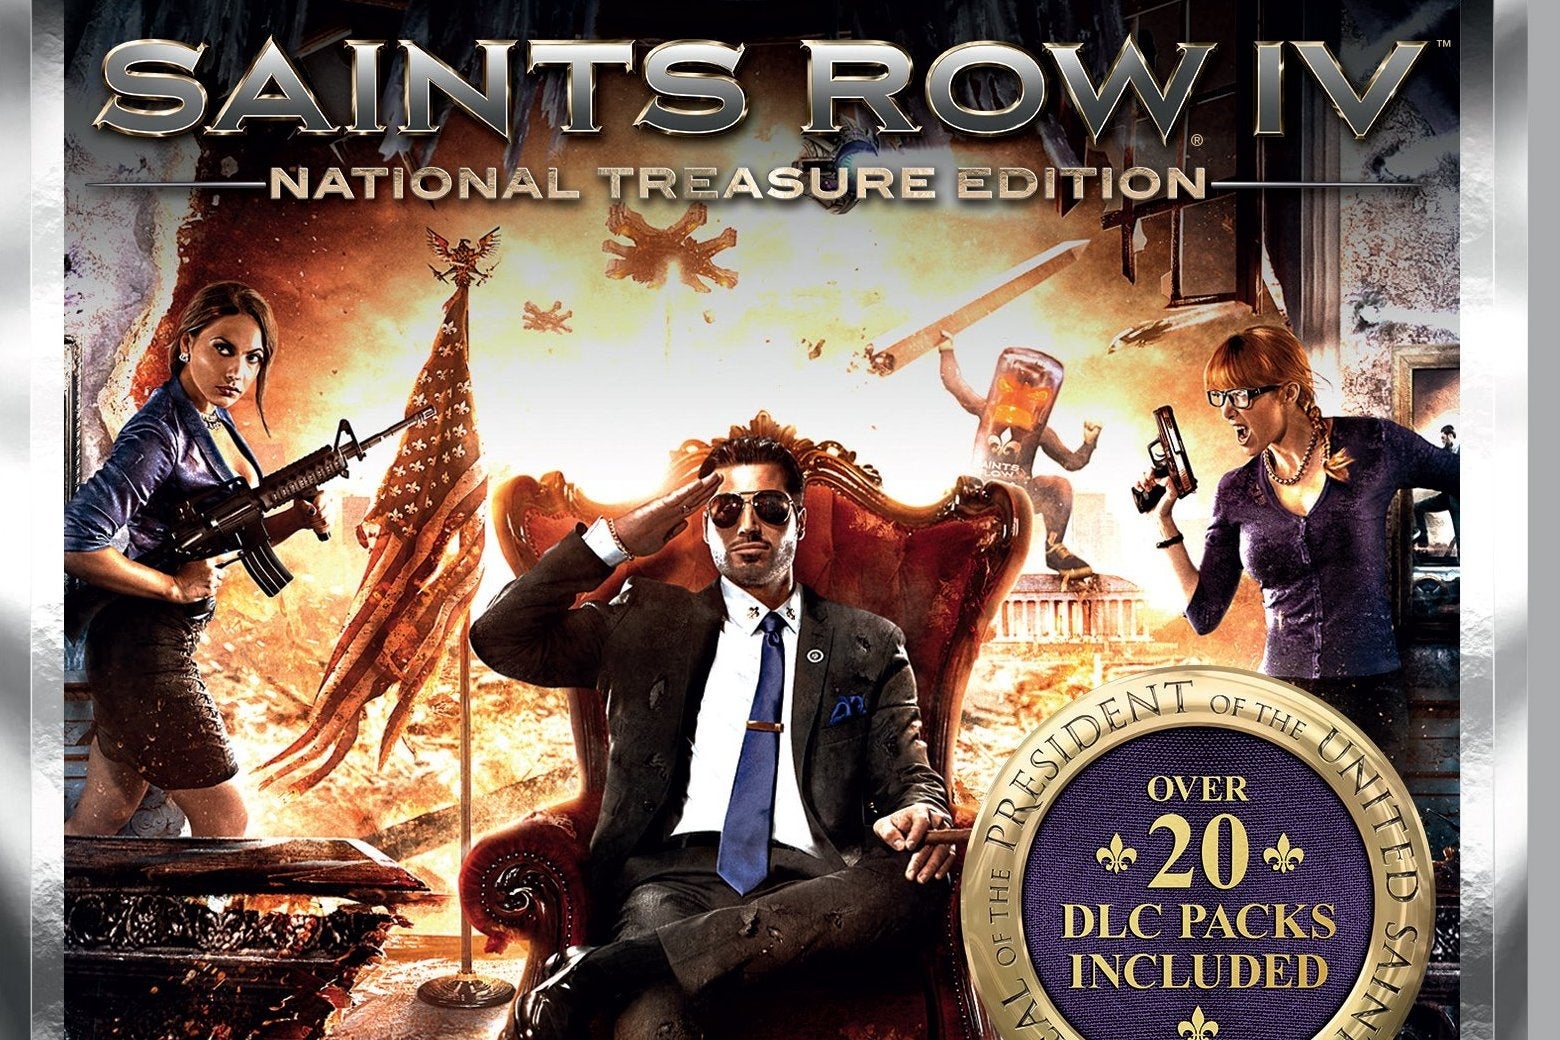 Imagem para Saints Row IV: National Treasure Edition revelada